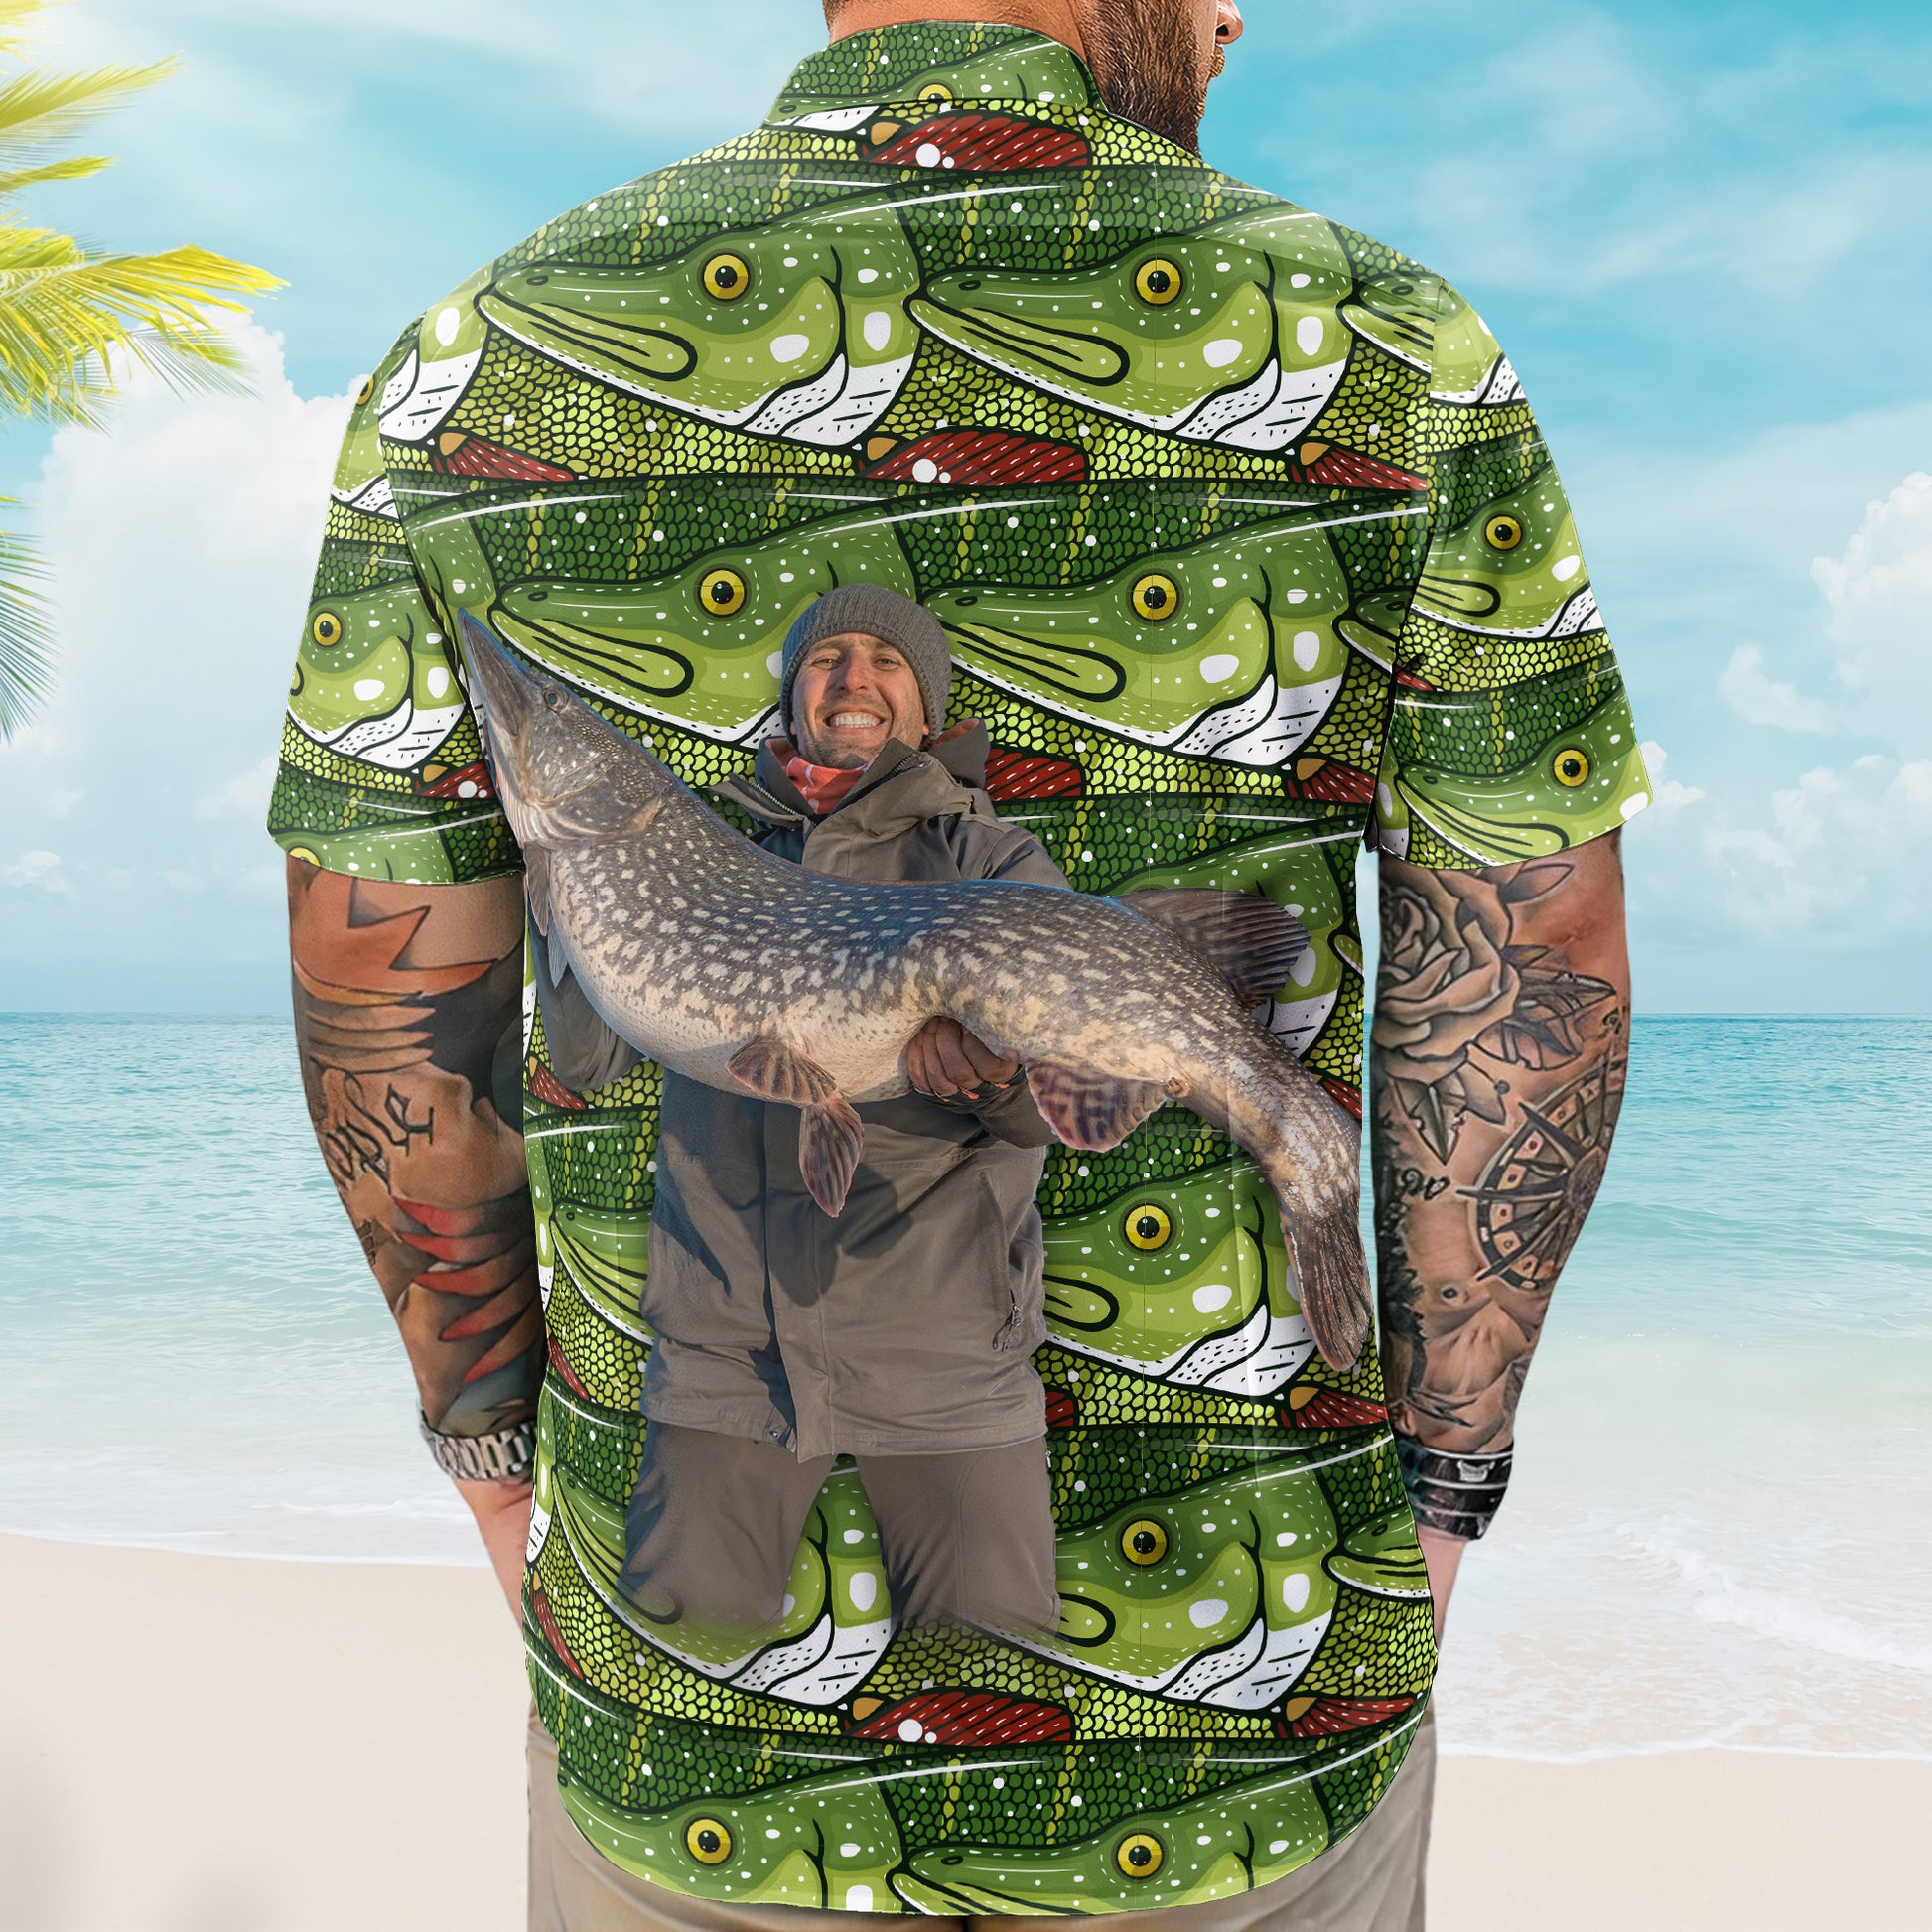 Custom Photo Bass Fish Fishing Makes Me Happy - Custom Photo Hawaiian Shirt